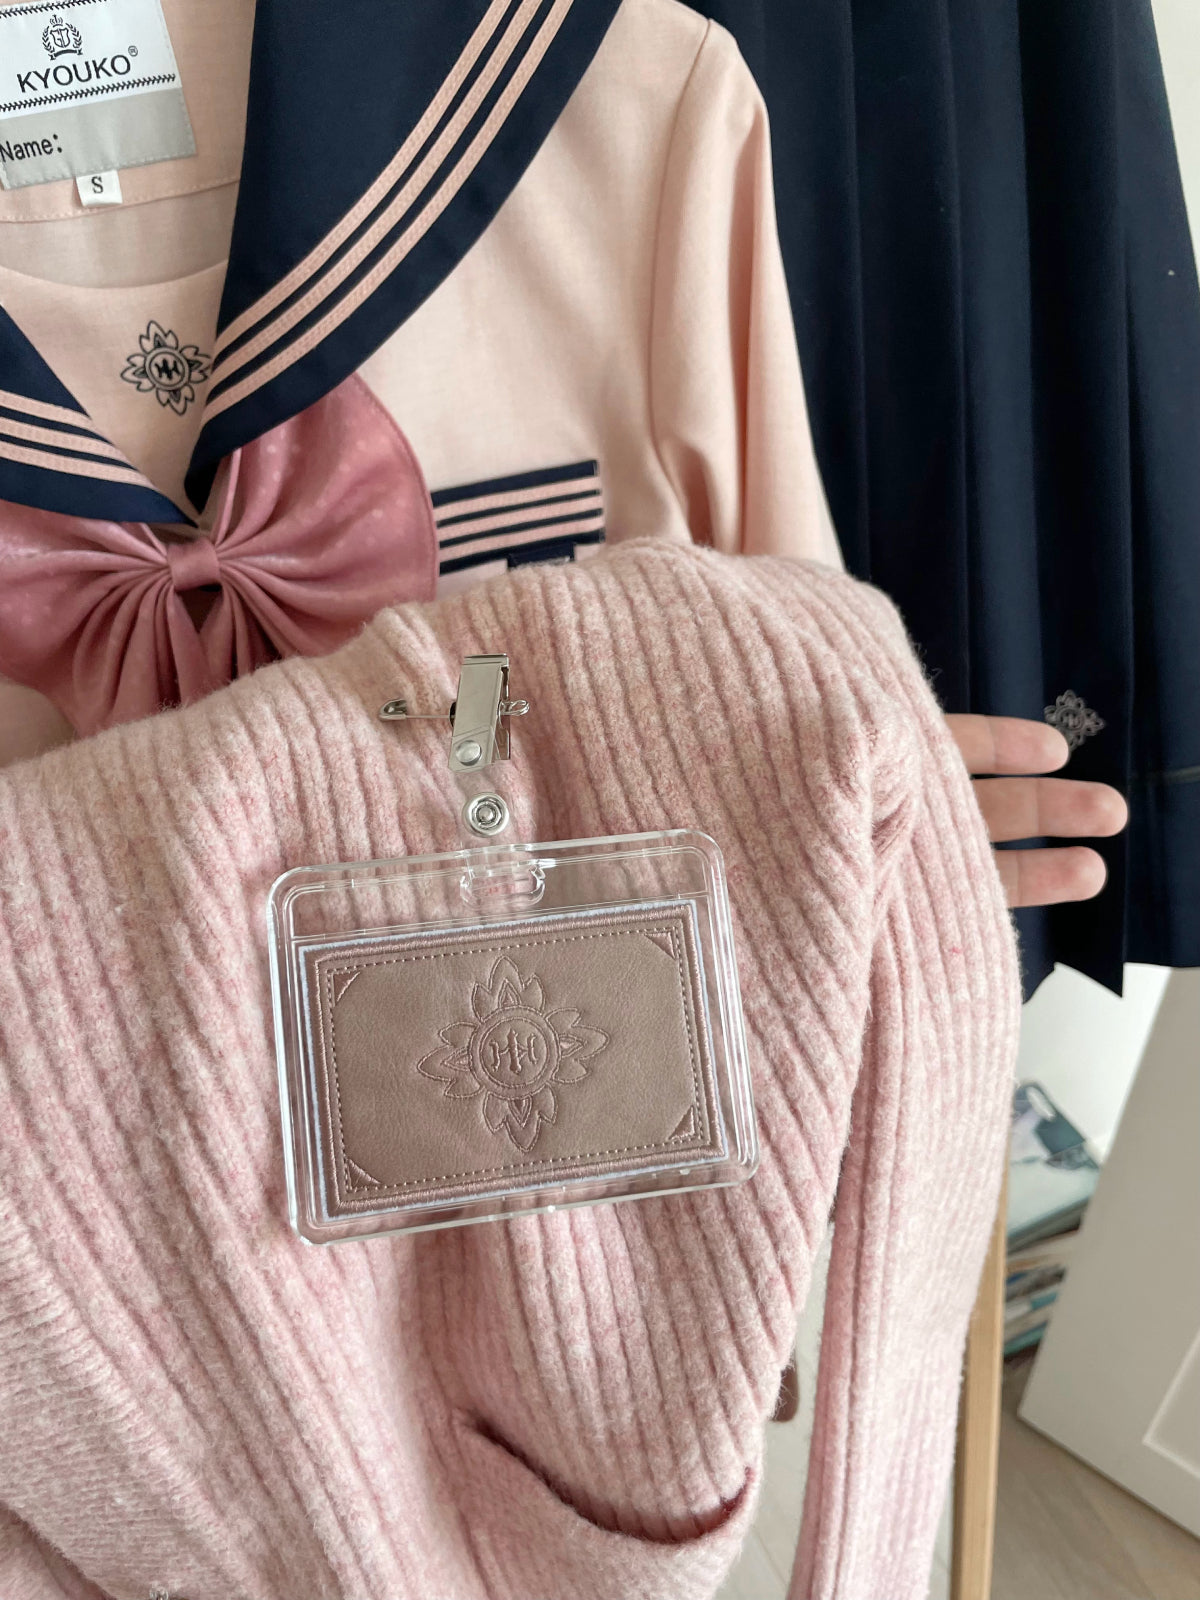 Sakura Petals JK Uniform Cardigan-ntbhshop